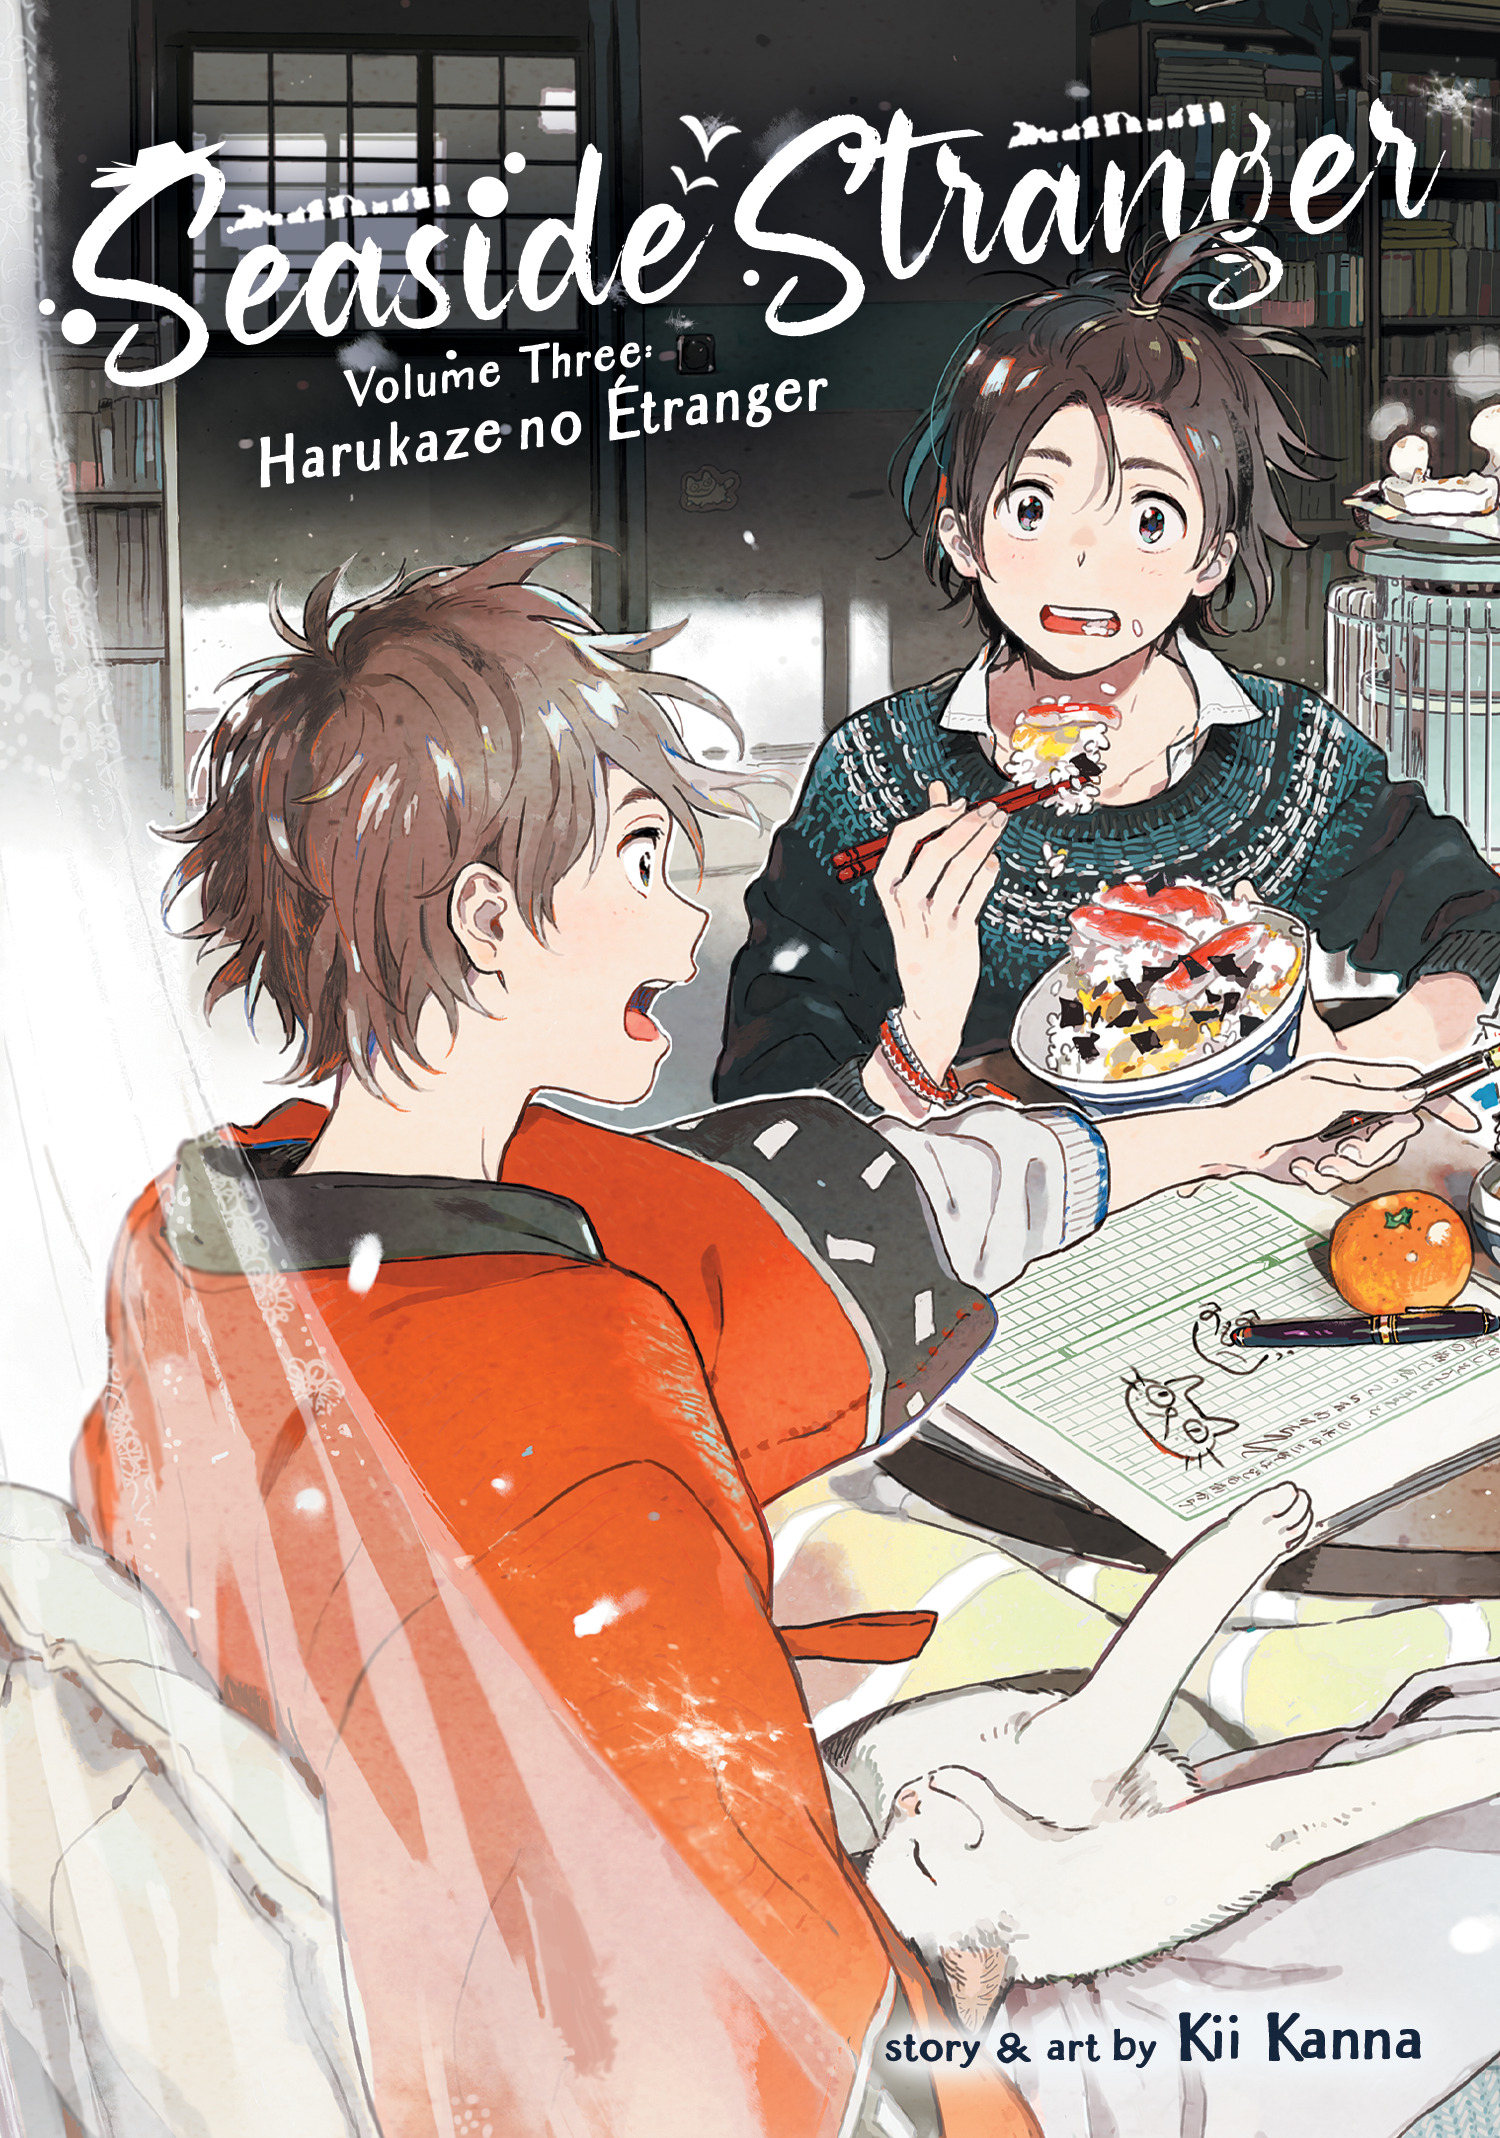 Seaside Stranger Vol. 3: Harukaze no Étranger | Graphic novel & Manga